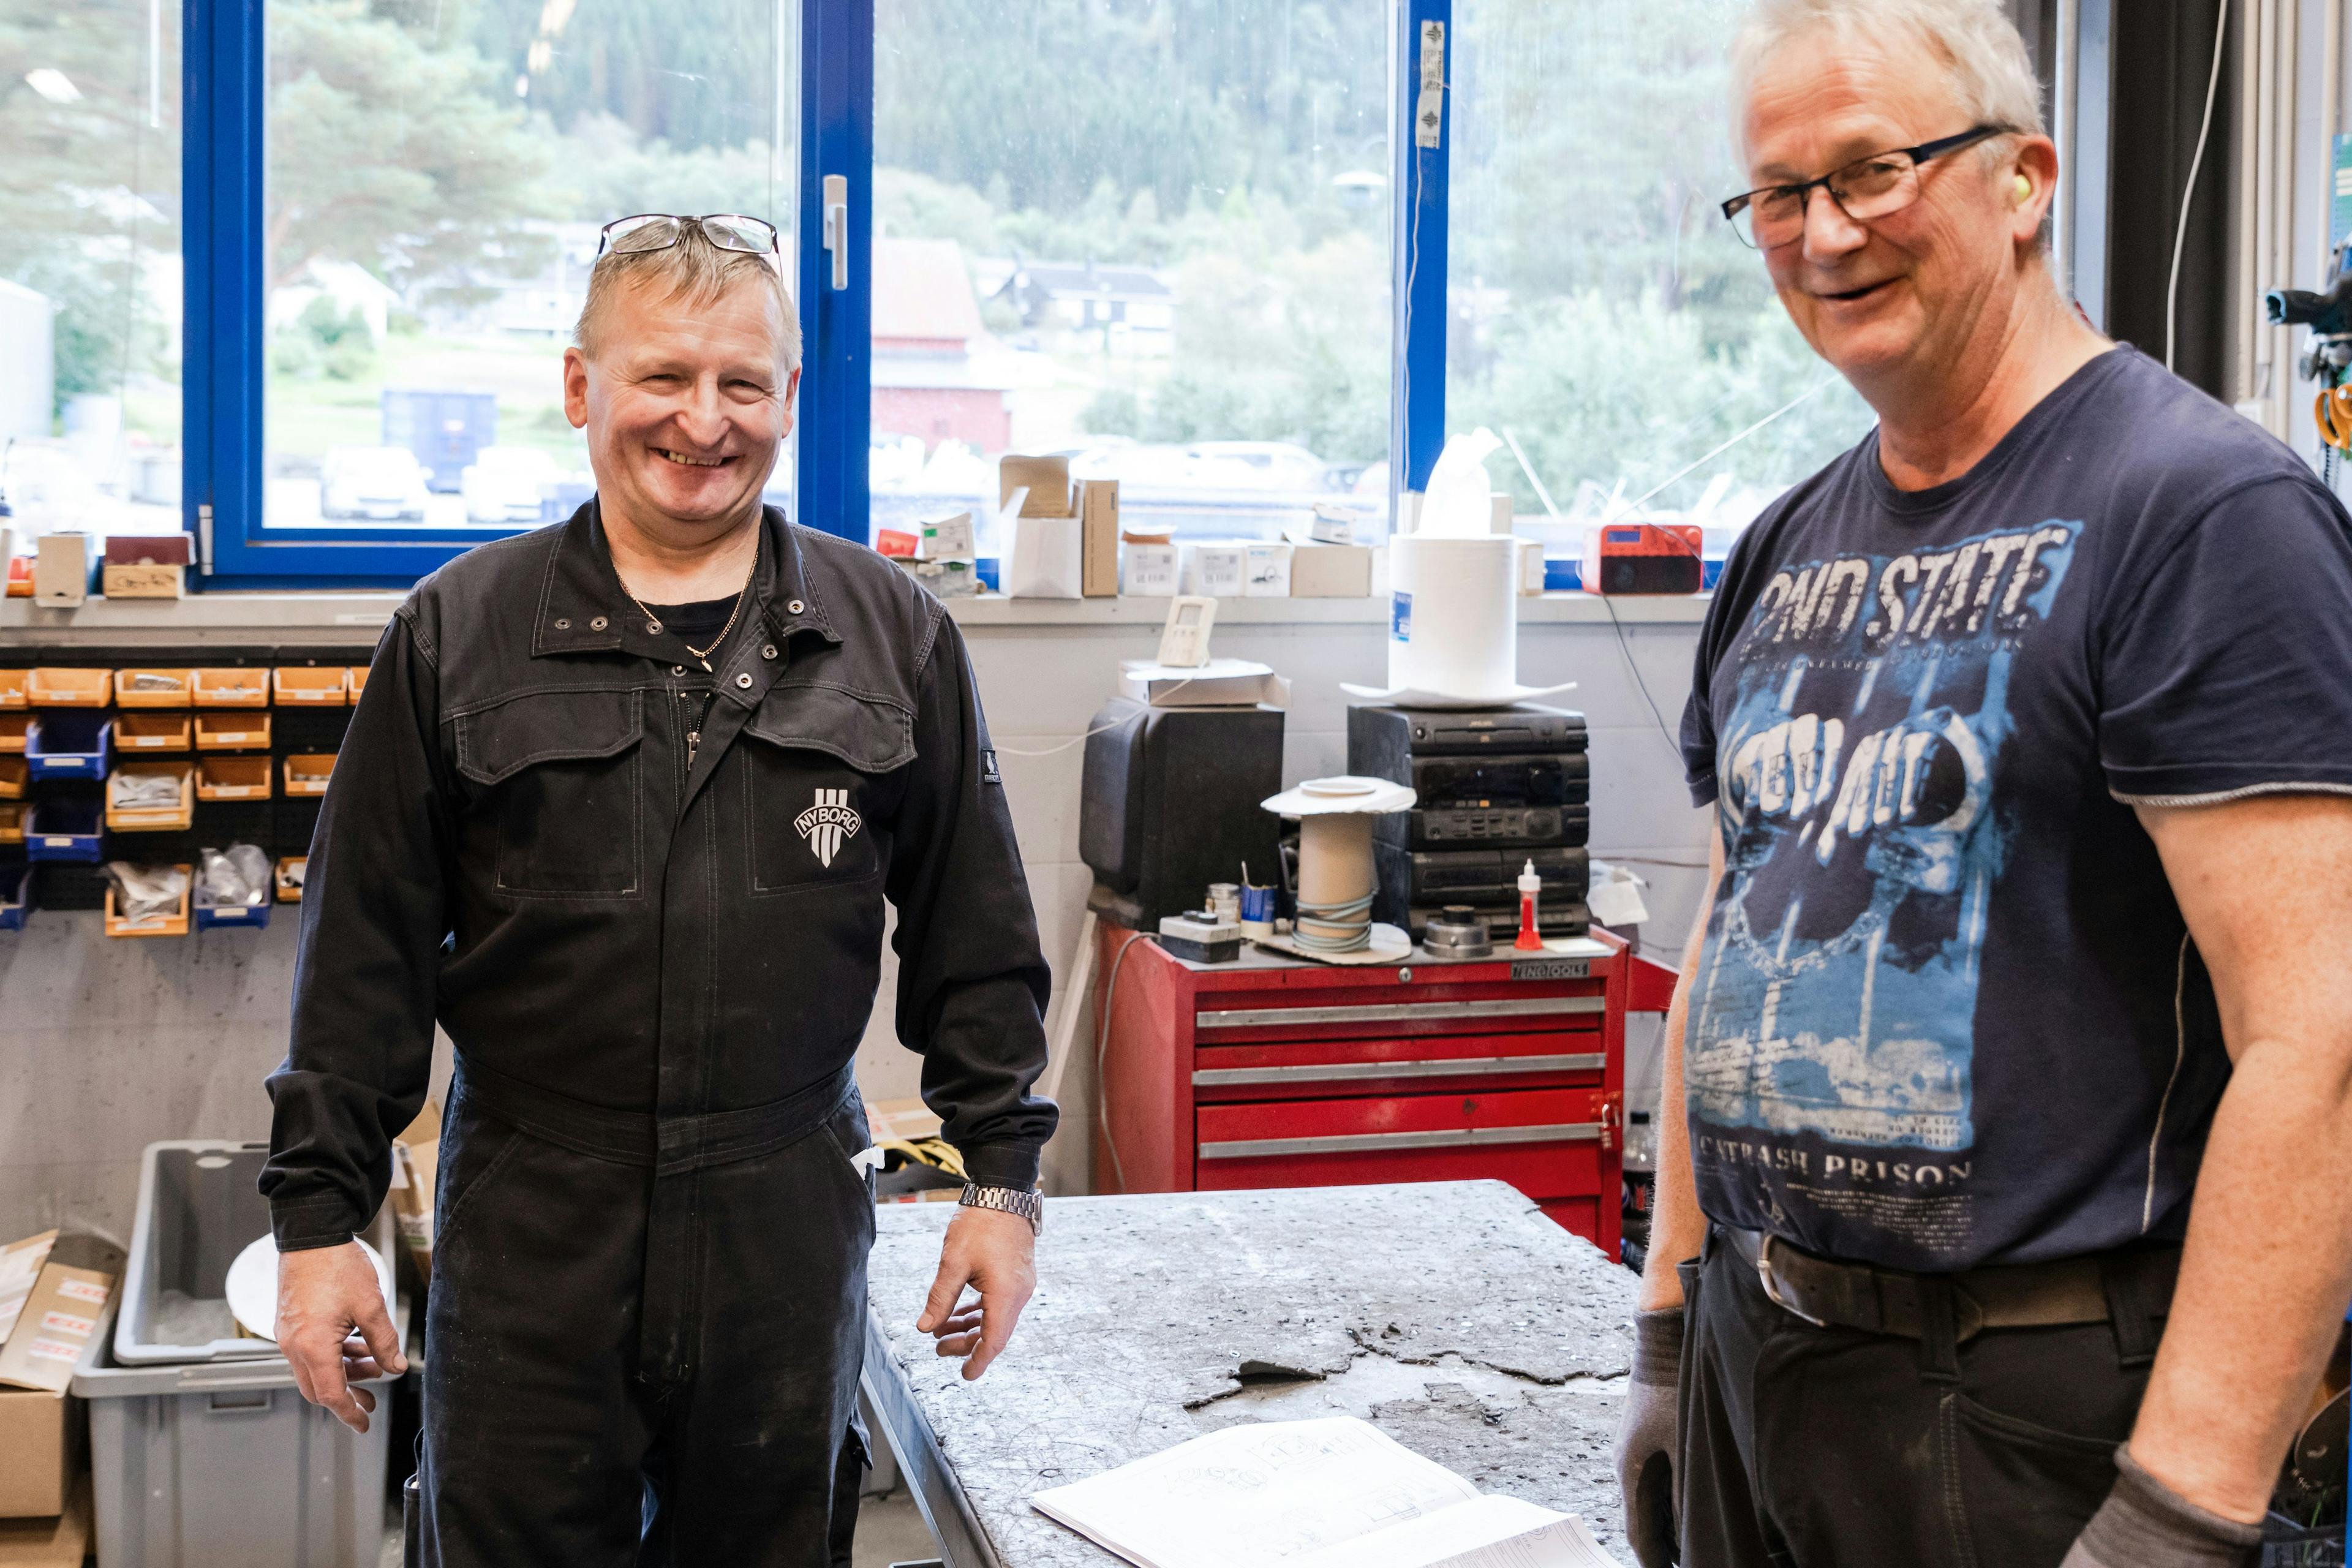 Workers smiling in workshop